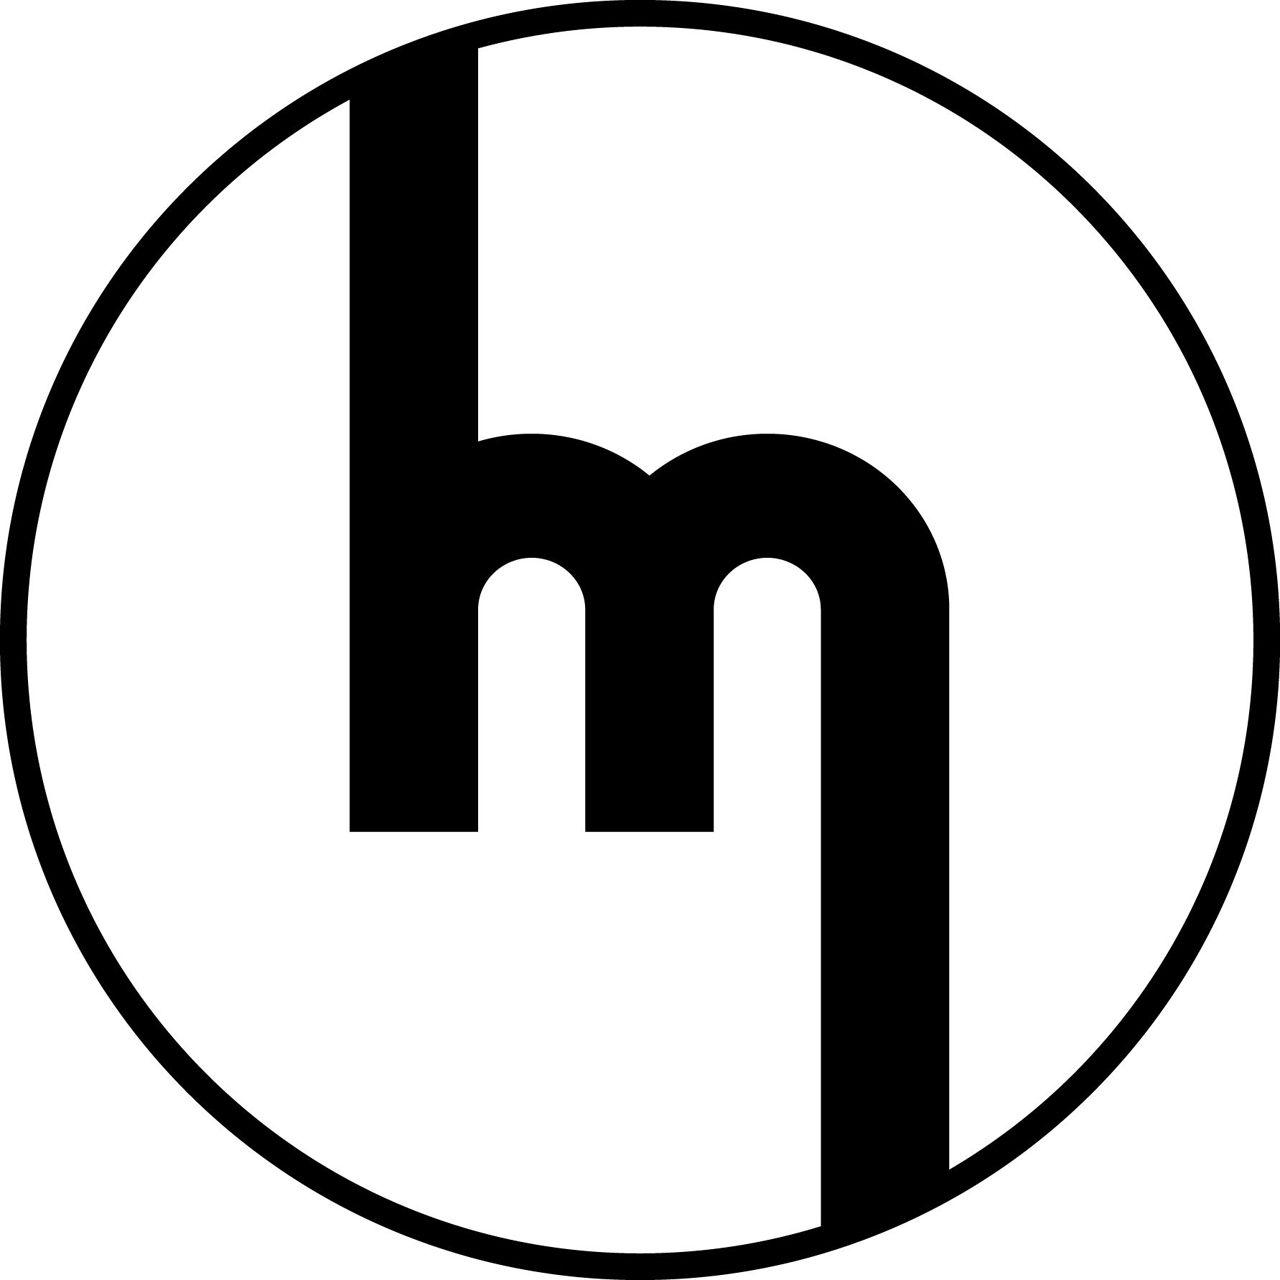 Mazda Vintage Logo - Image - Mazda 60s logo.jpg | Ultraman Wiki | FANDOM powered by Wikia